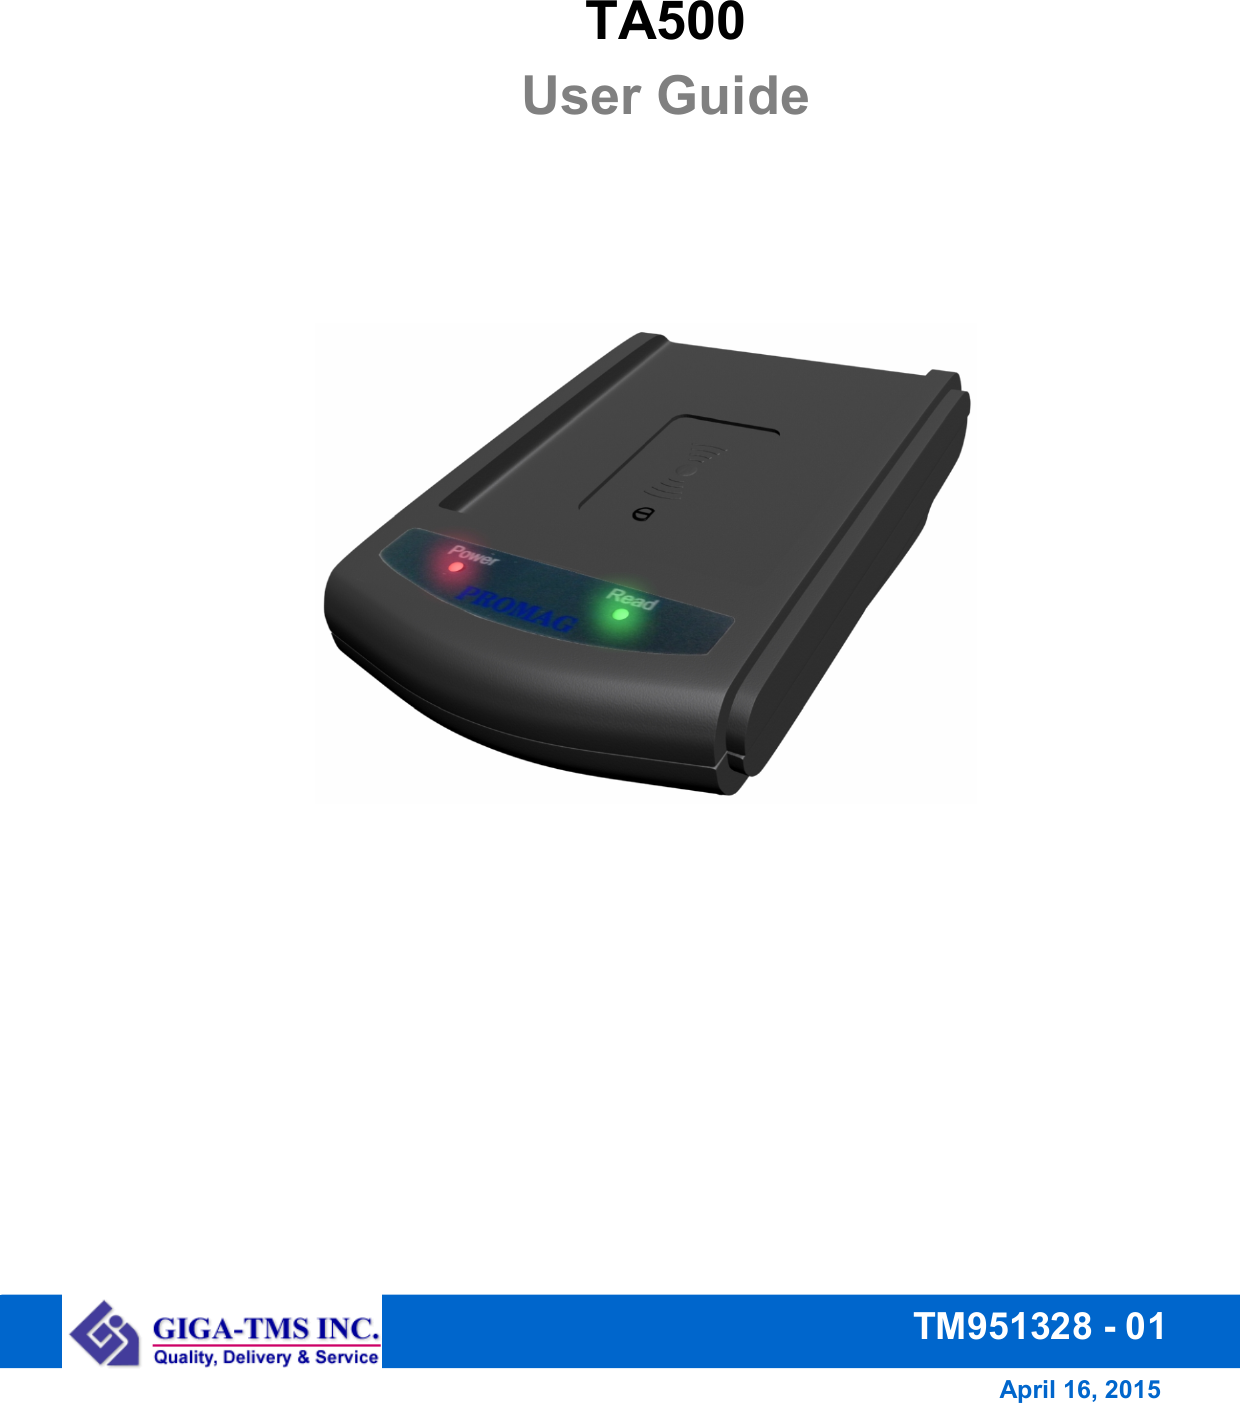                            TA500   User Guide  April 16, 2015 TM951328 - 01 